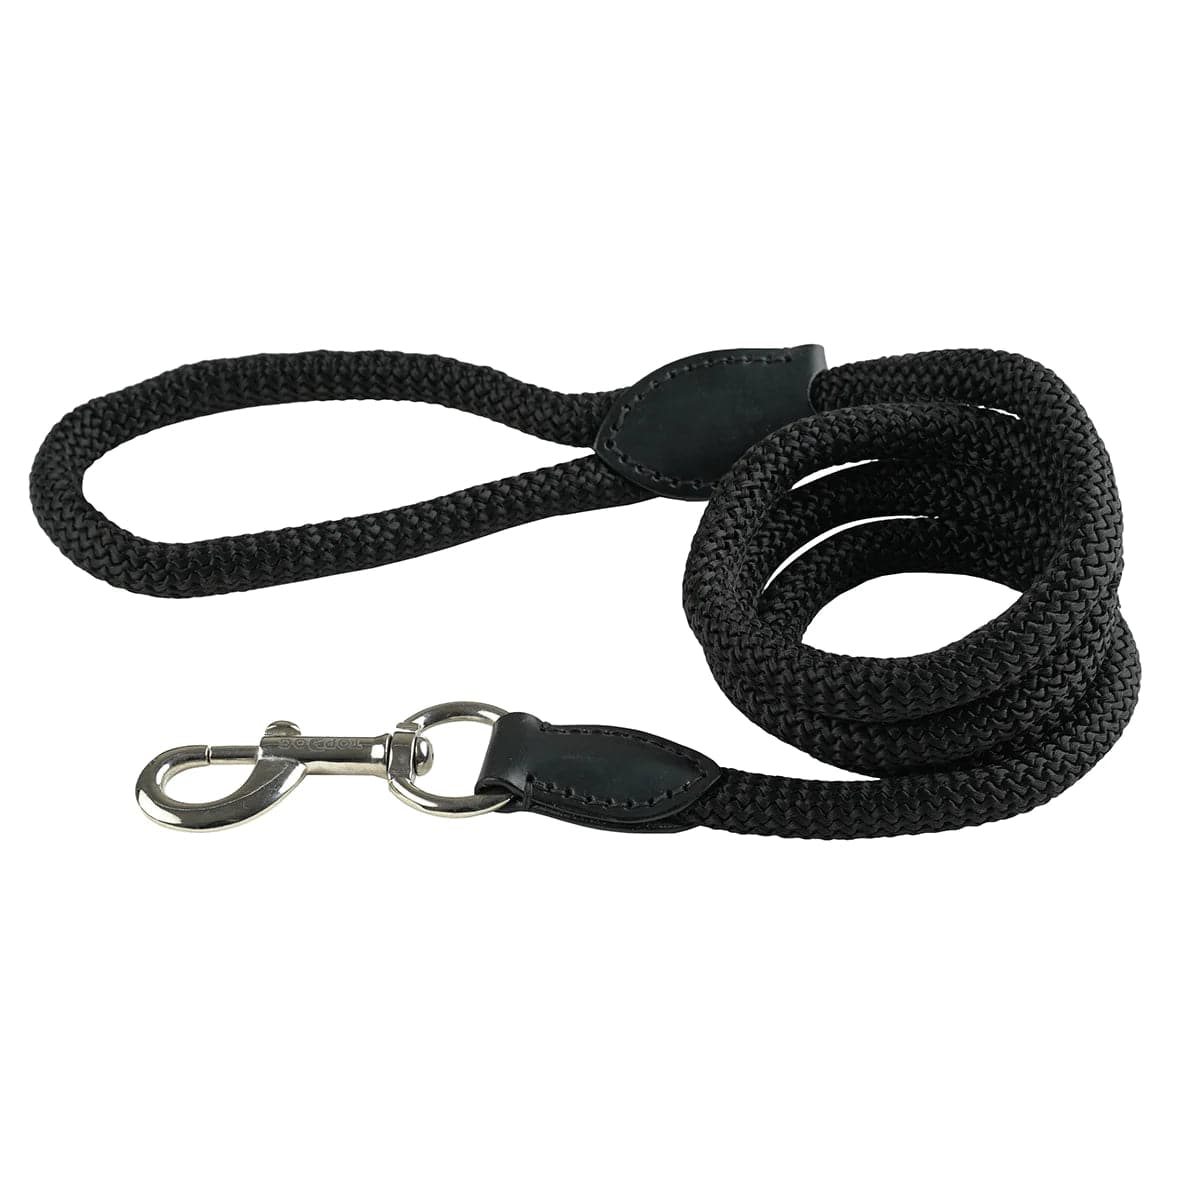 TOPDOG PREMIUM Nylon Rope Leash - Black, Large